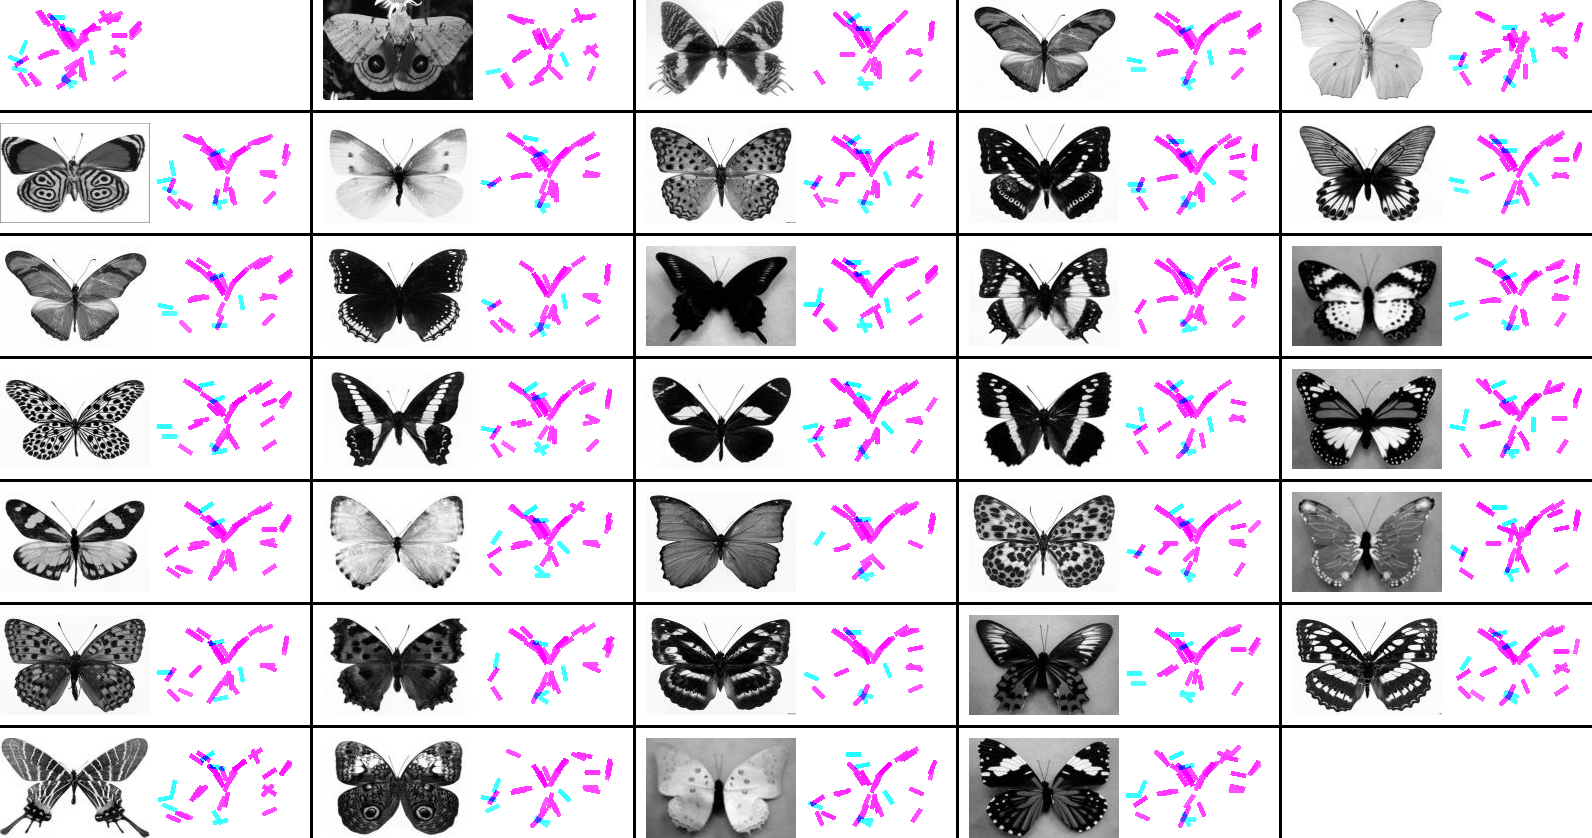 adaboost template for butterfly